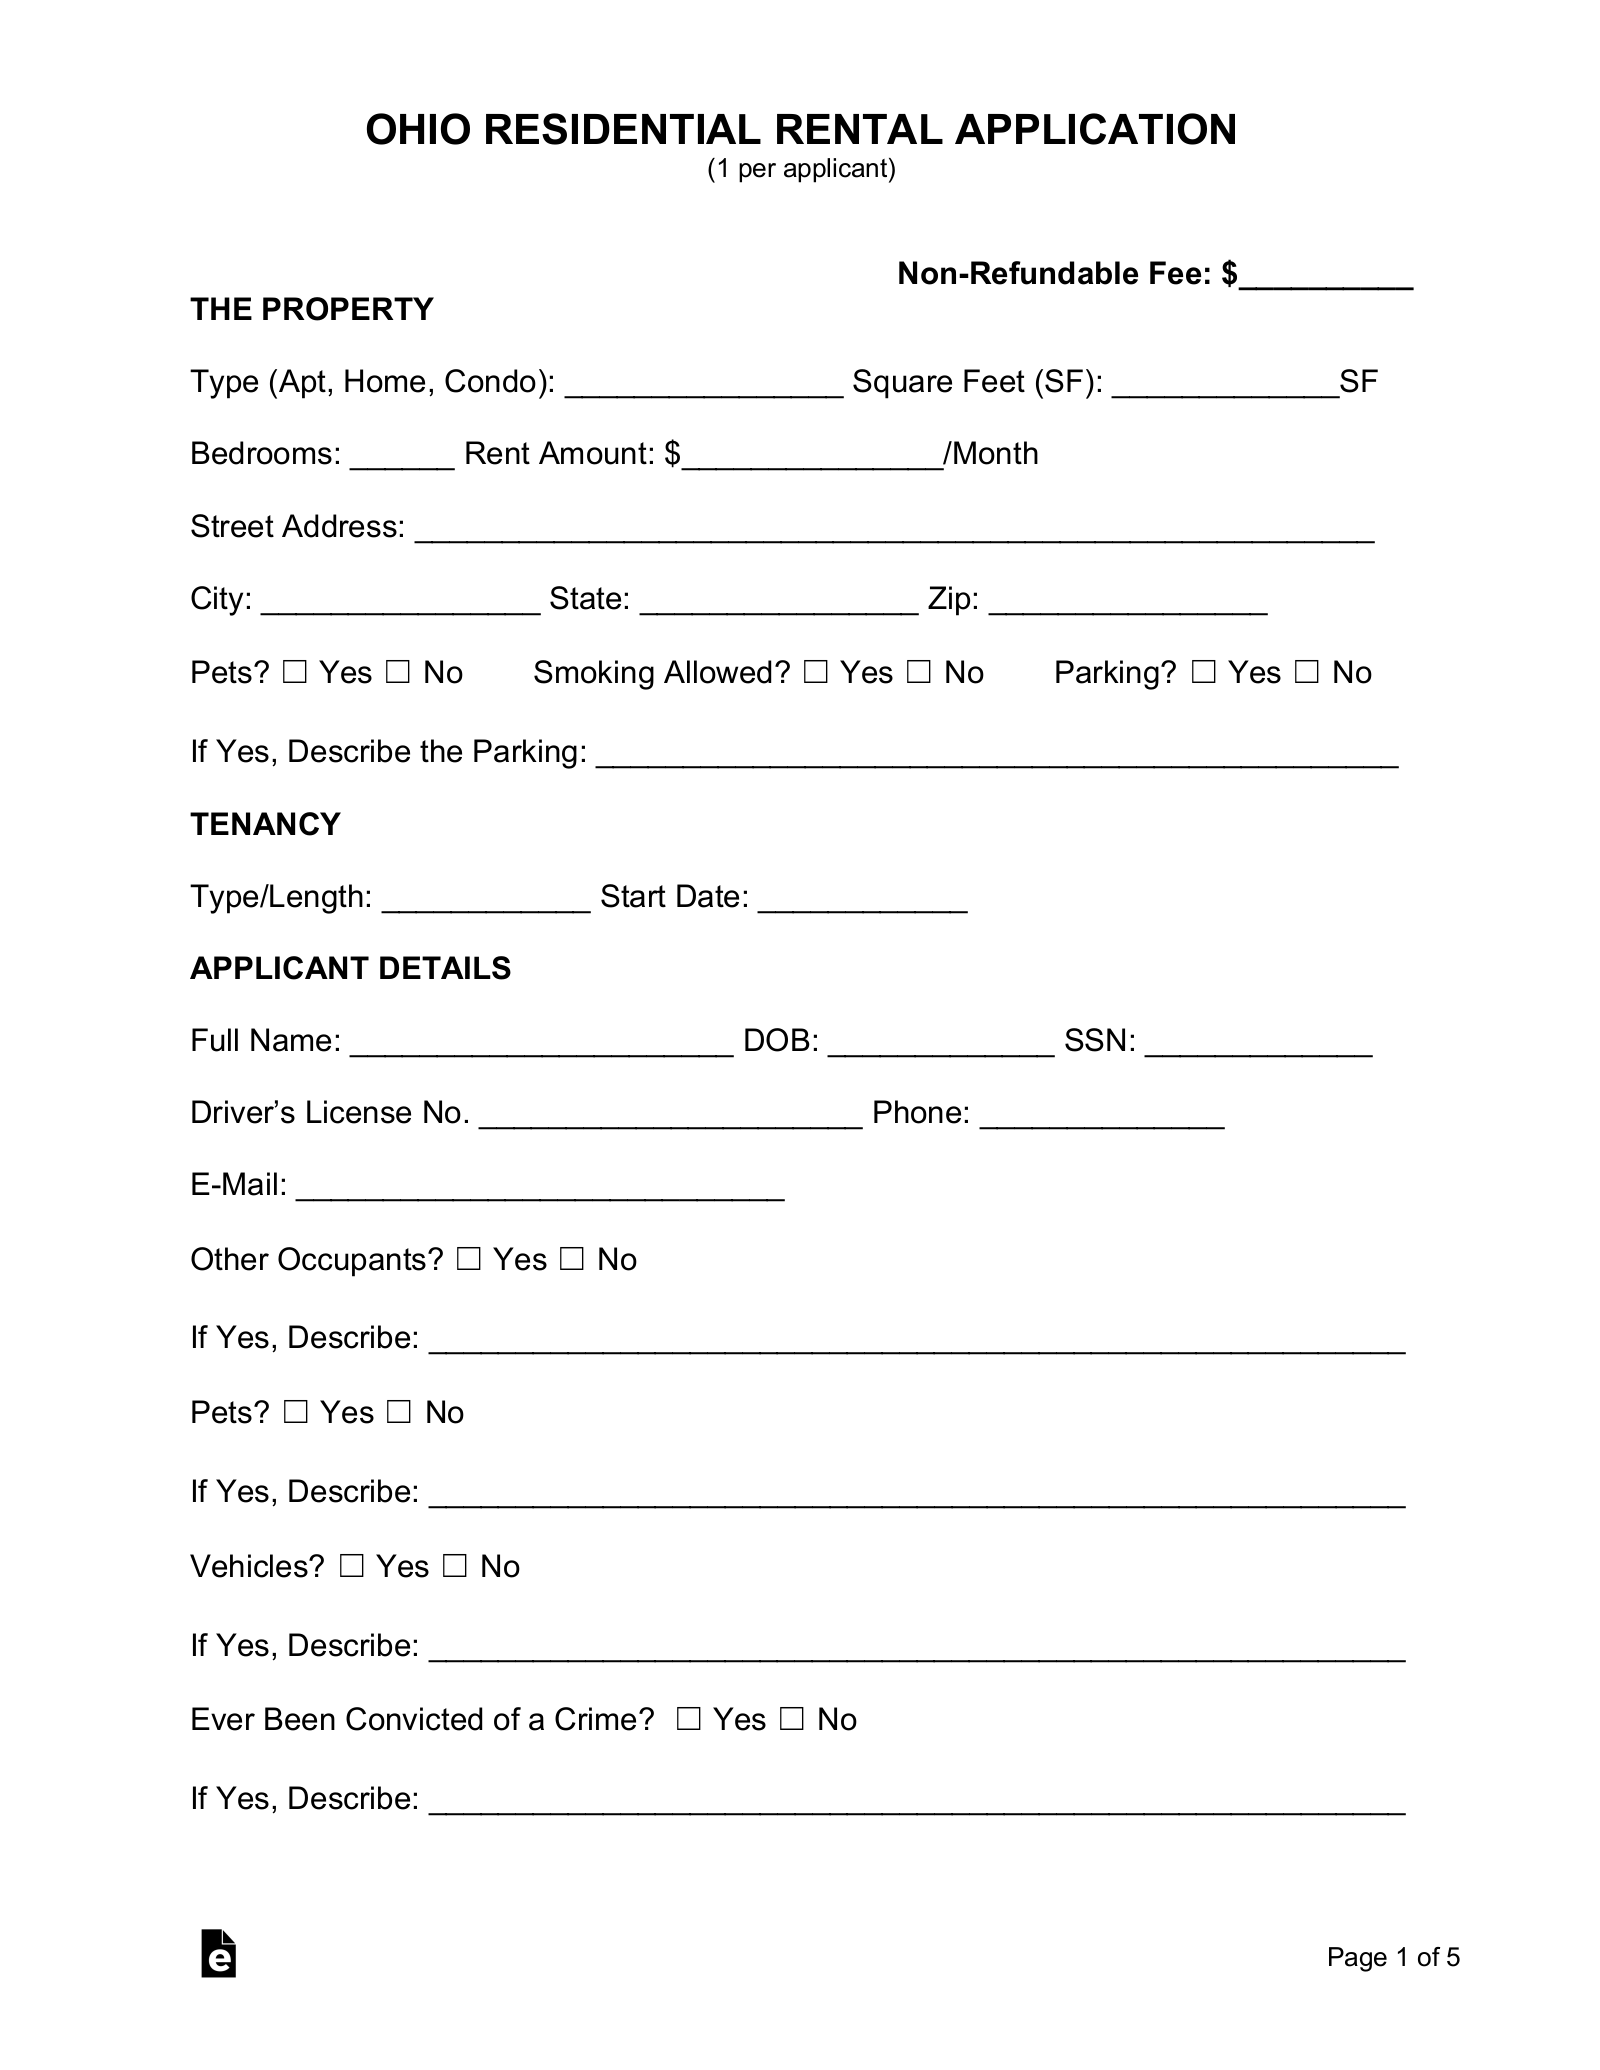 free-ohio-rental-application-form-pdf-word-eforms